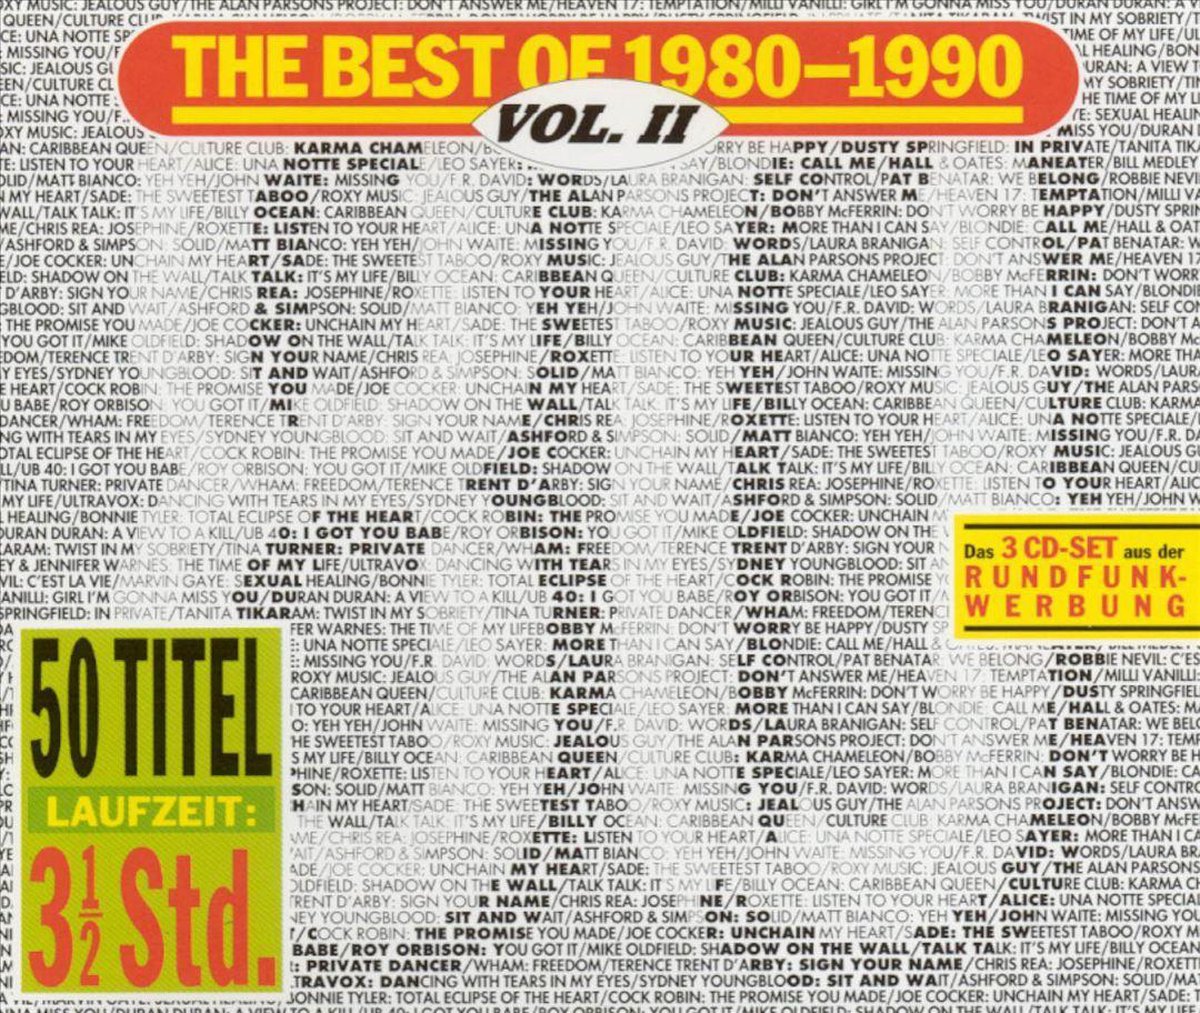 Best of 1980-1990, Vol. 2 - various artists